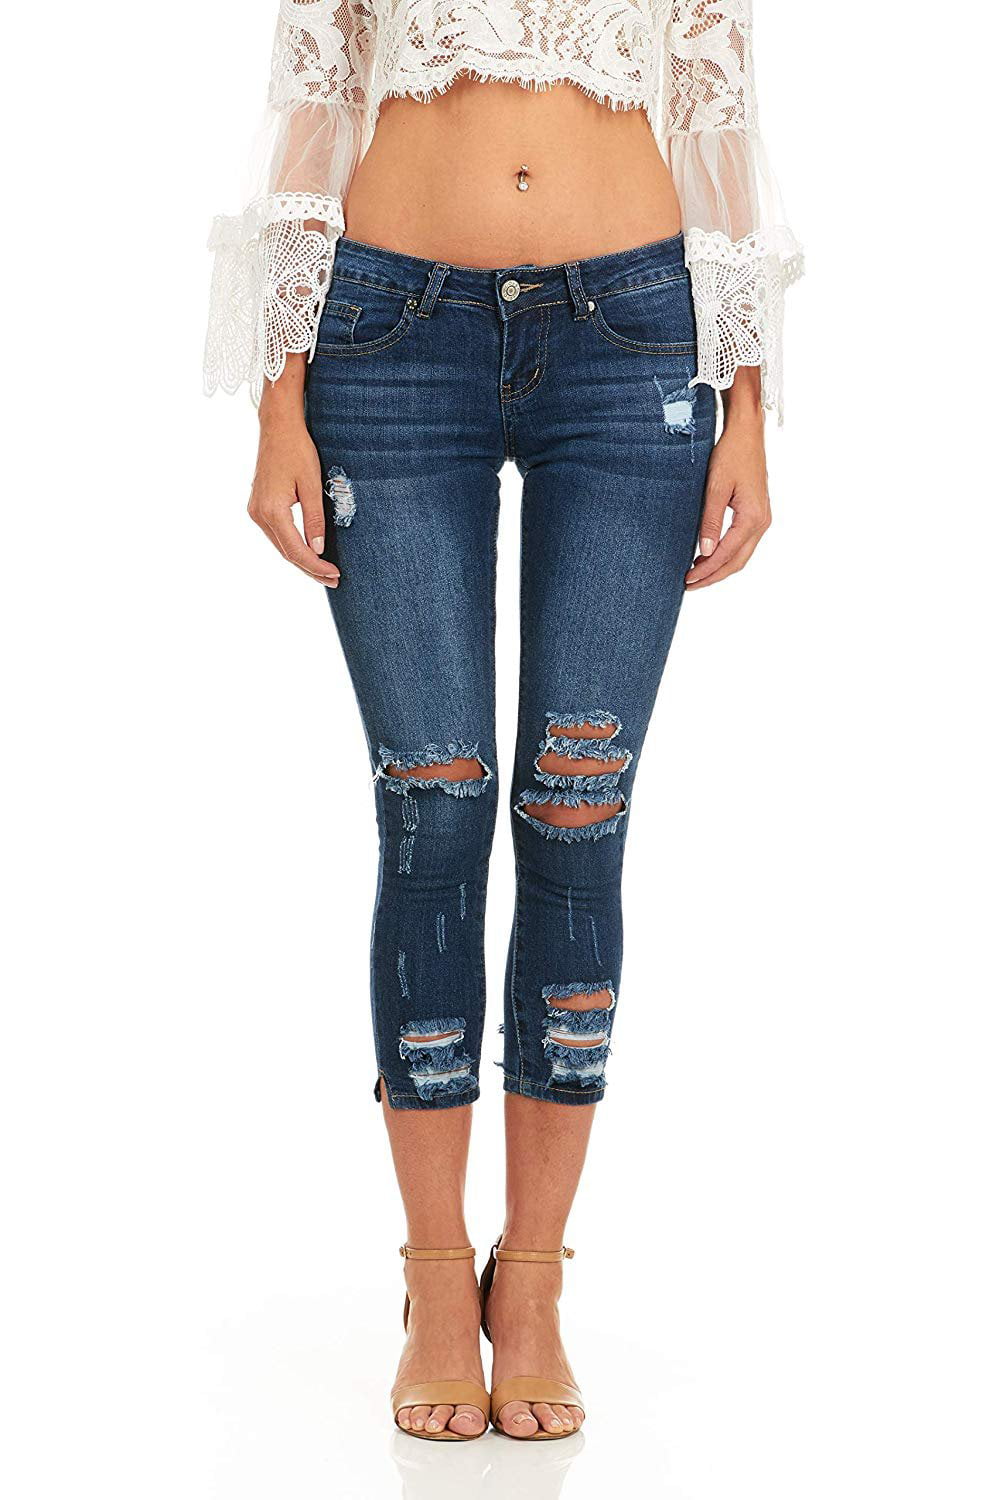 slim girl jeans top